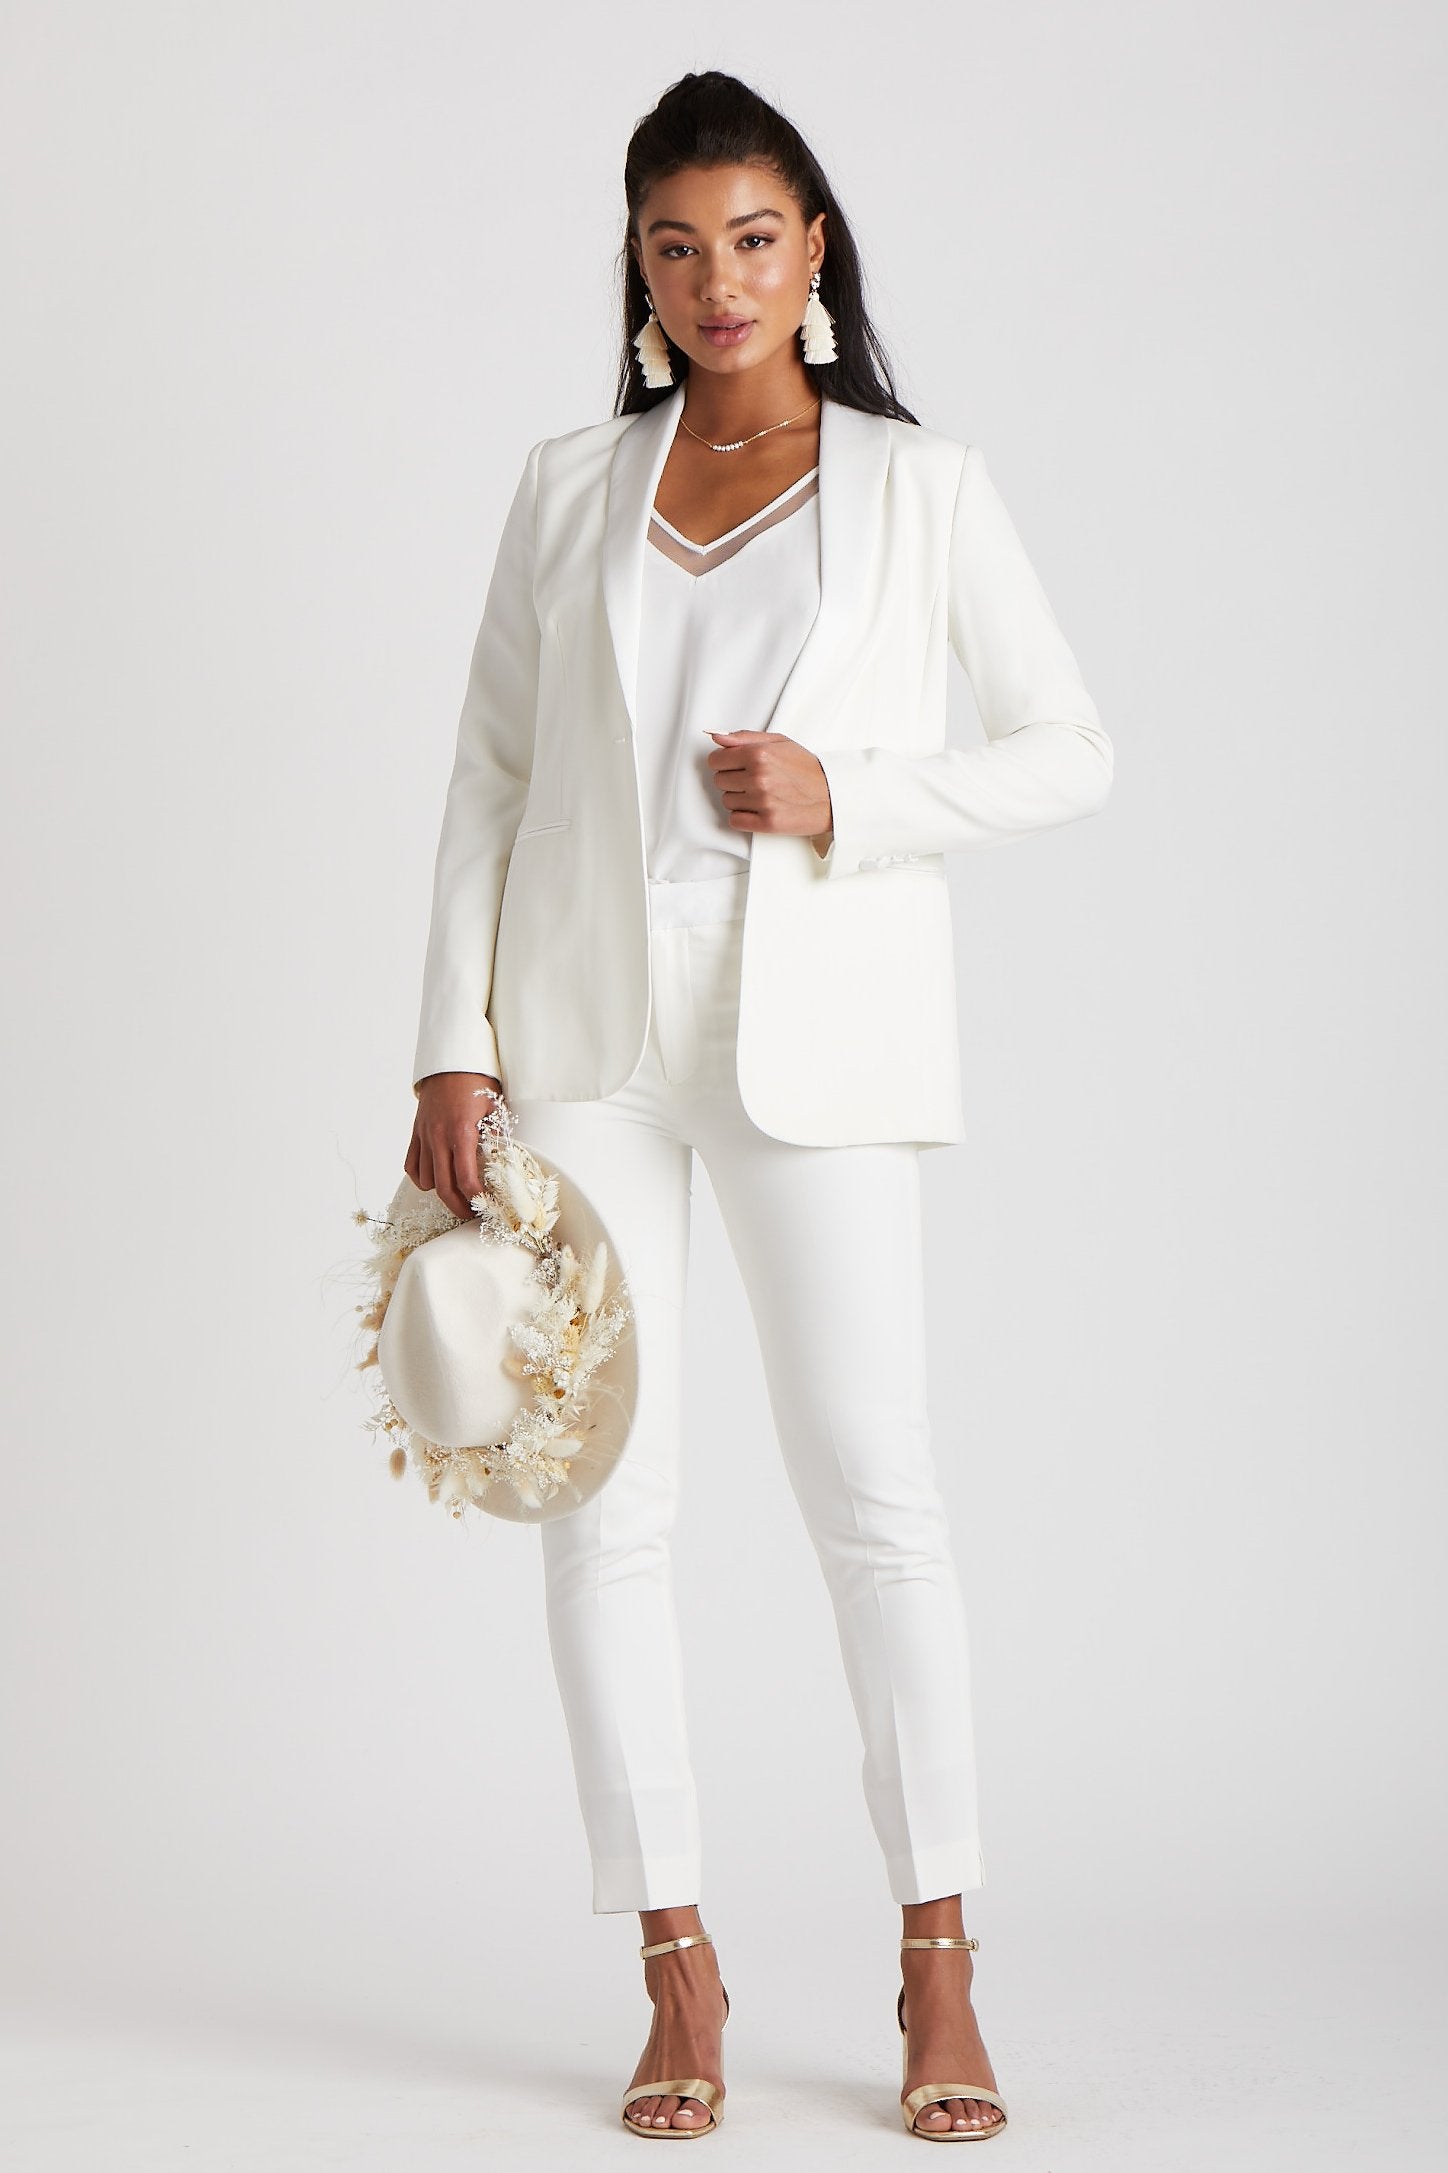 Women's White Tuxedo Jacket by SuitShop